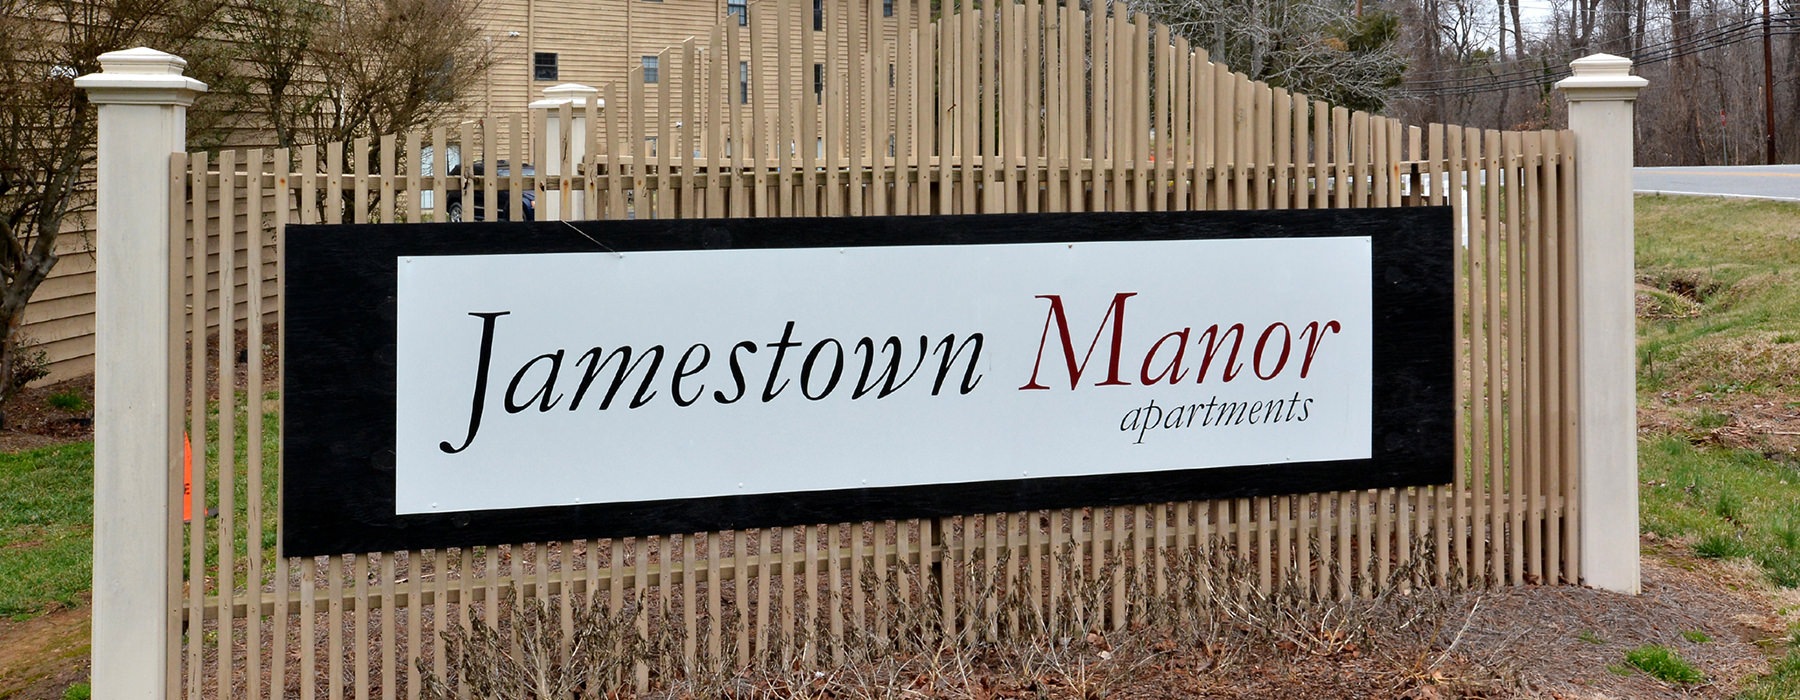 Jamestown Manor Sign 